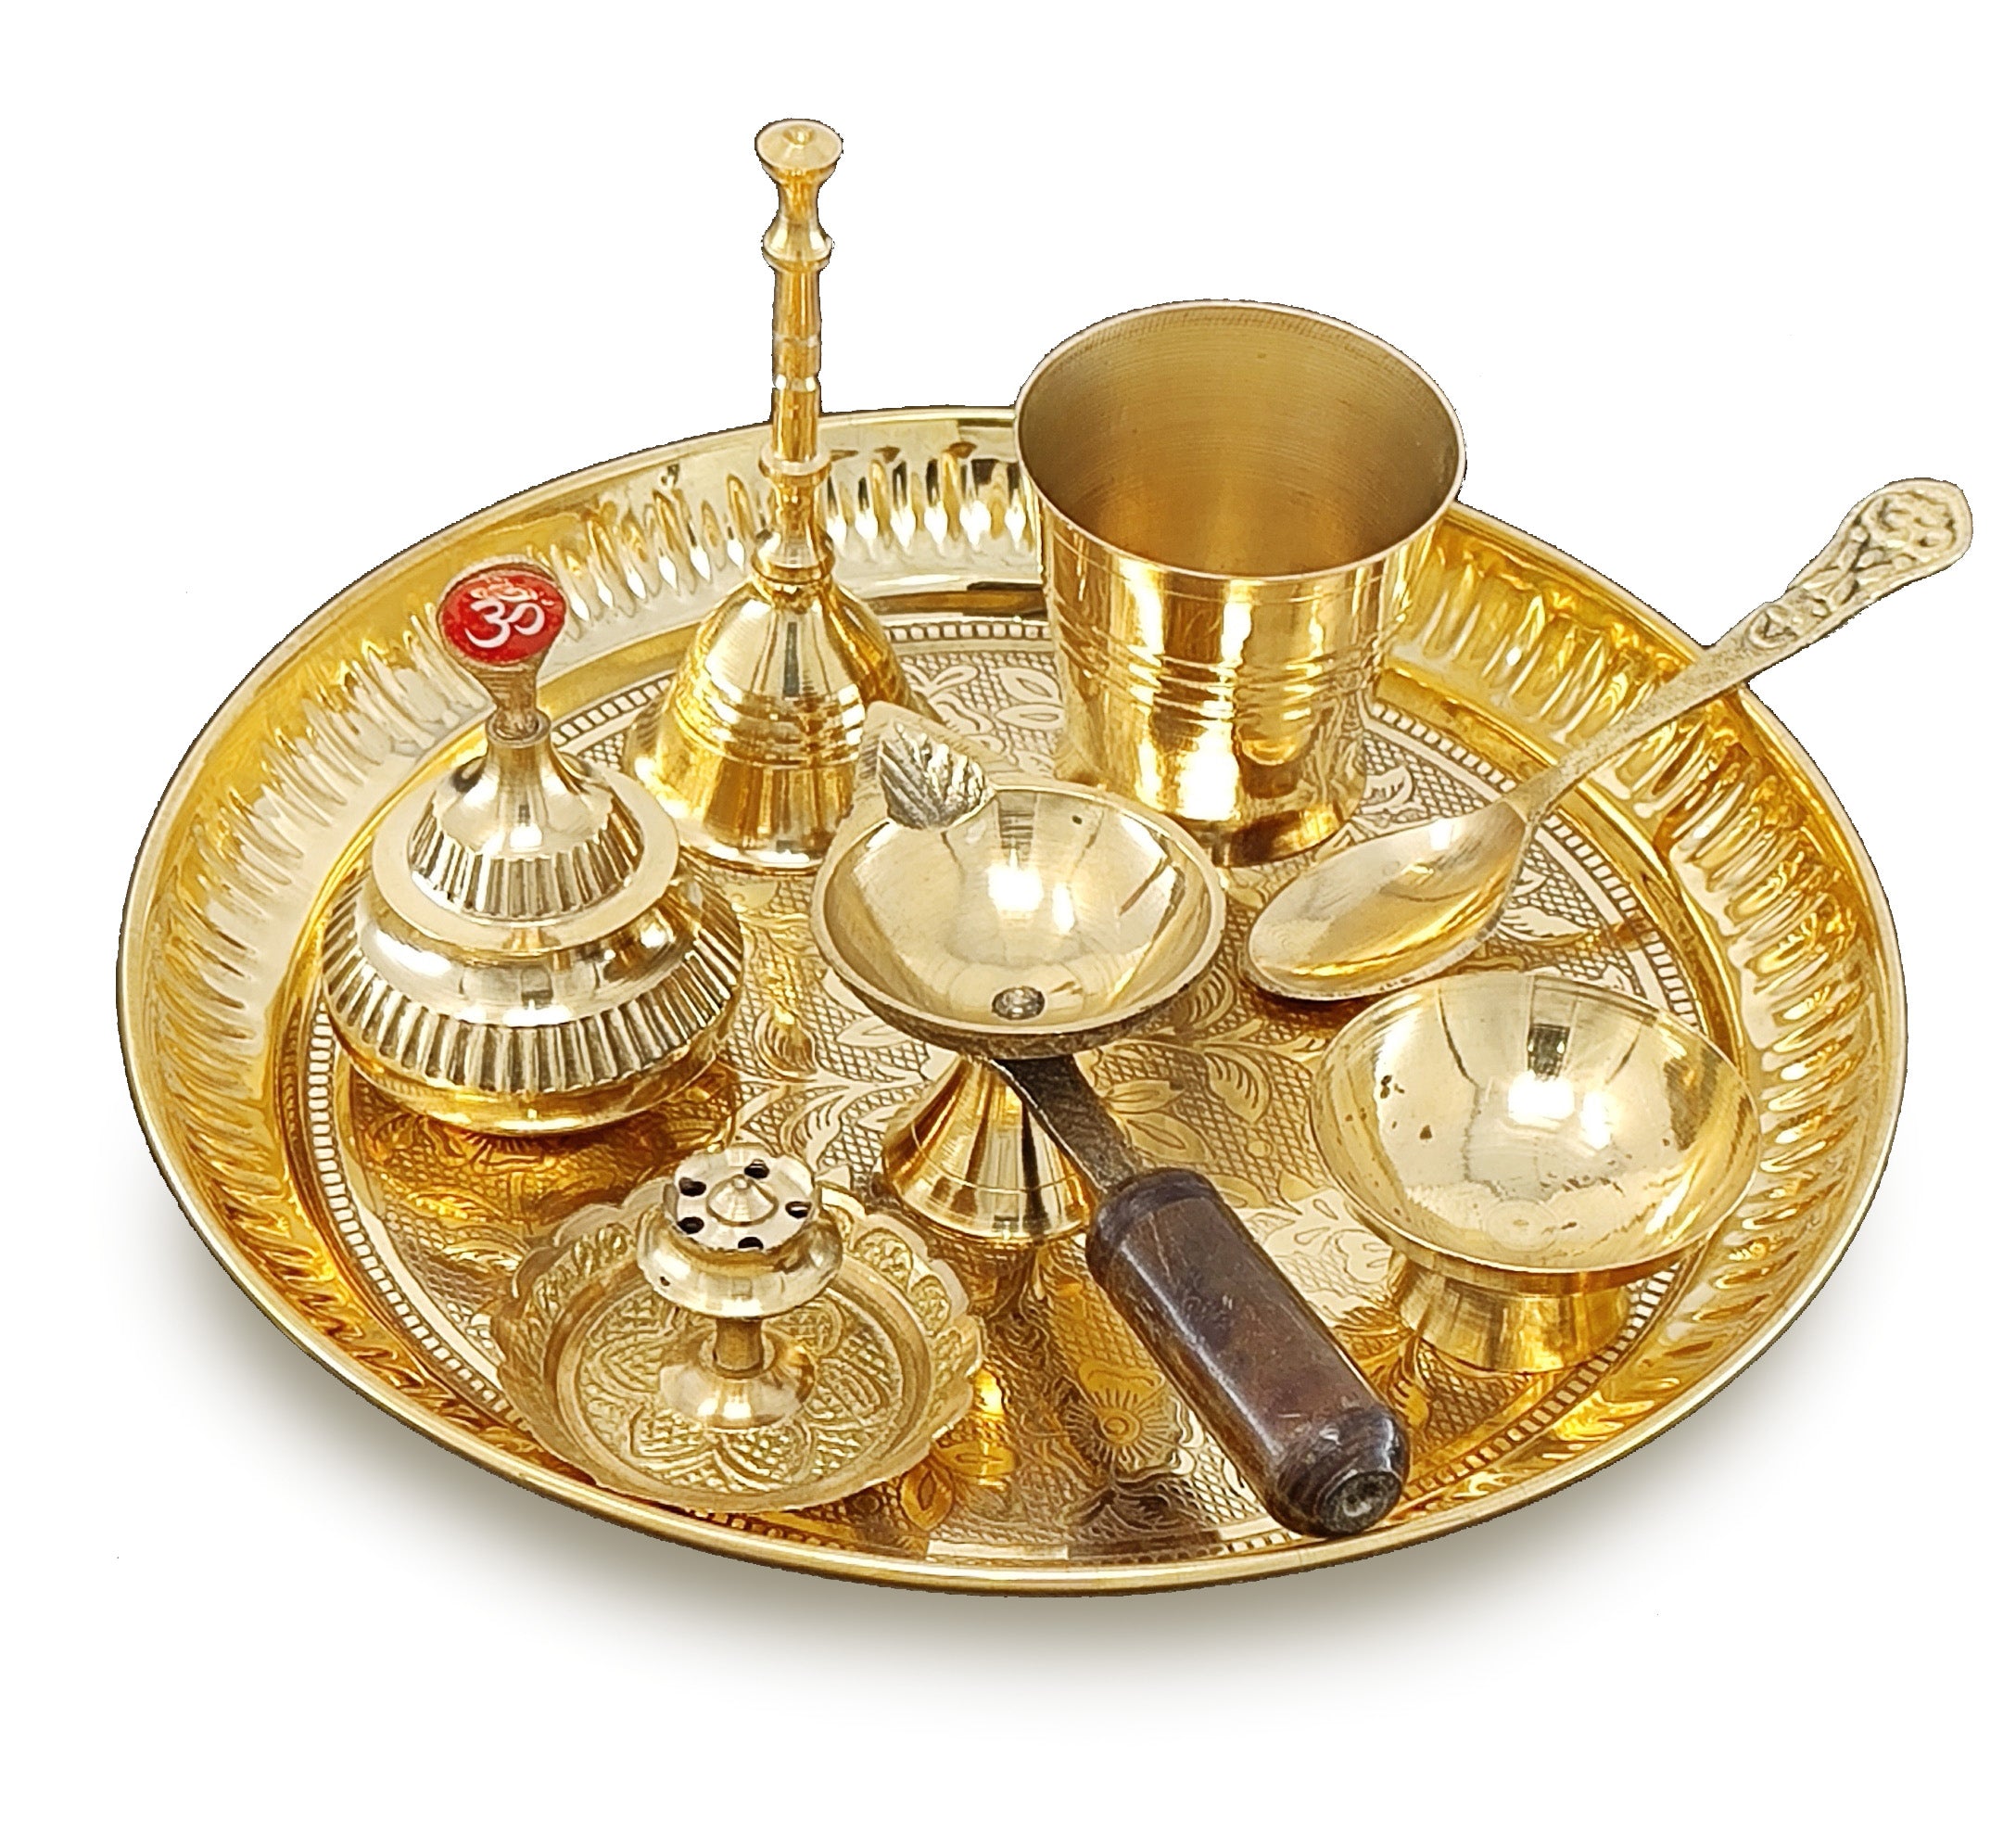 BENGALEN Brass Pooja Thali Set 7 Inch with Pital Puja Plate Kalash Bowl Spoon Dhup Dan Palli Ghanti Kuber Diya Chandan Wati Arti Thali for Diwali Home Office Mandir Wedding Return Gift Items